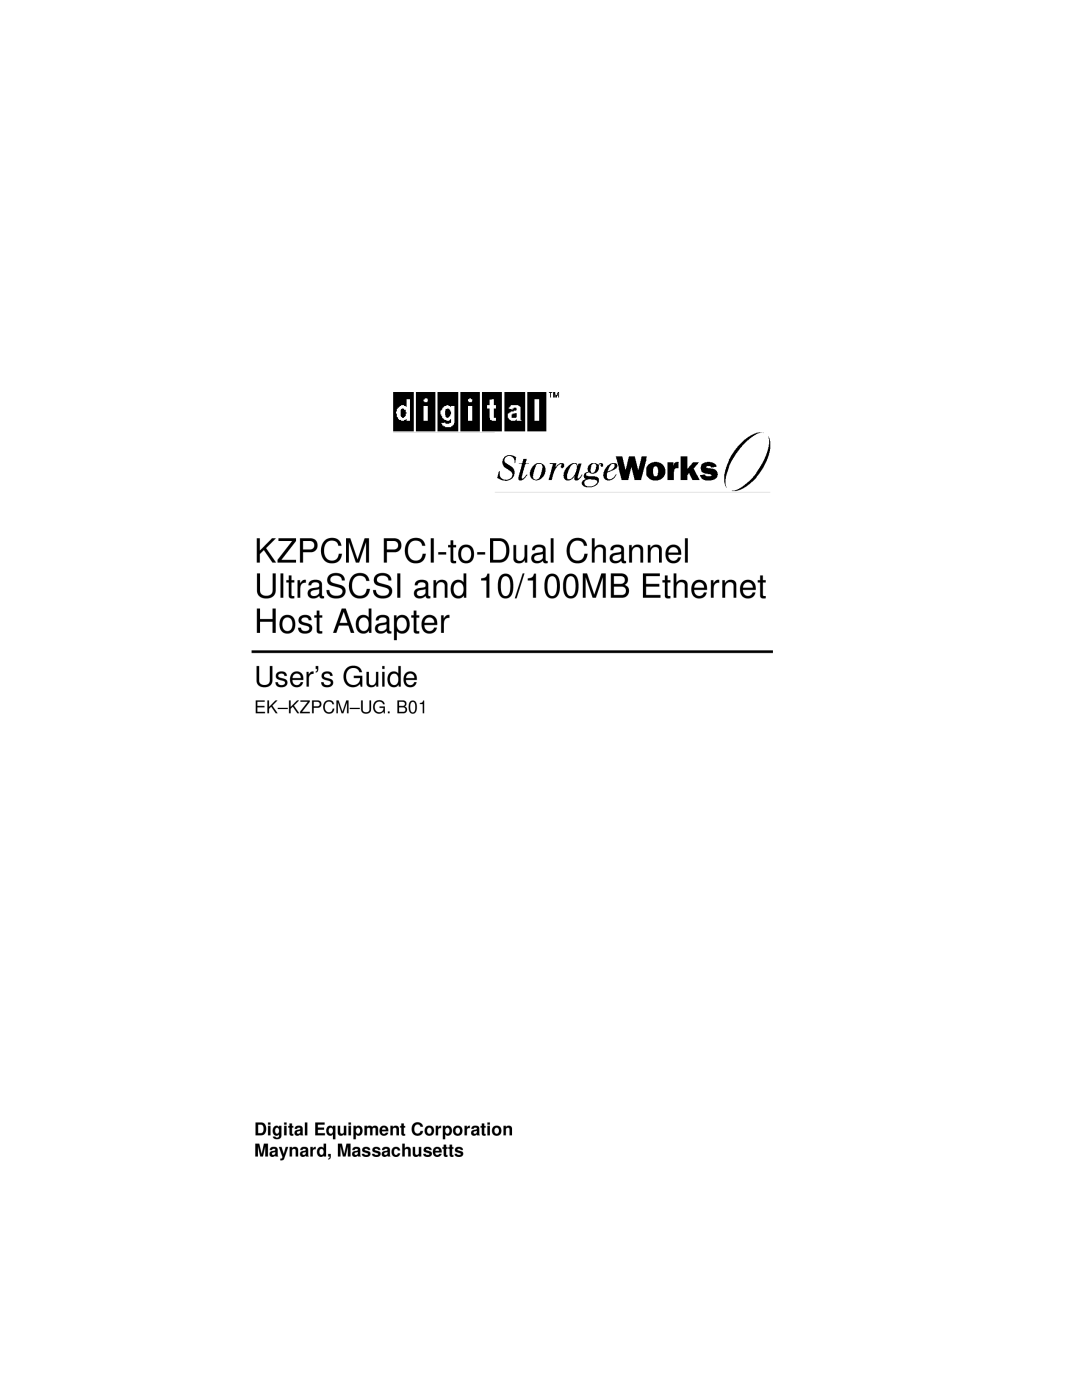 Intel EK-KZPCM-UG manual KZPCM PCI-to-Dual Channel UltraSCSI and 10/100MB Ethernet, Host Adapter, User’s Guide 